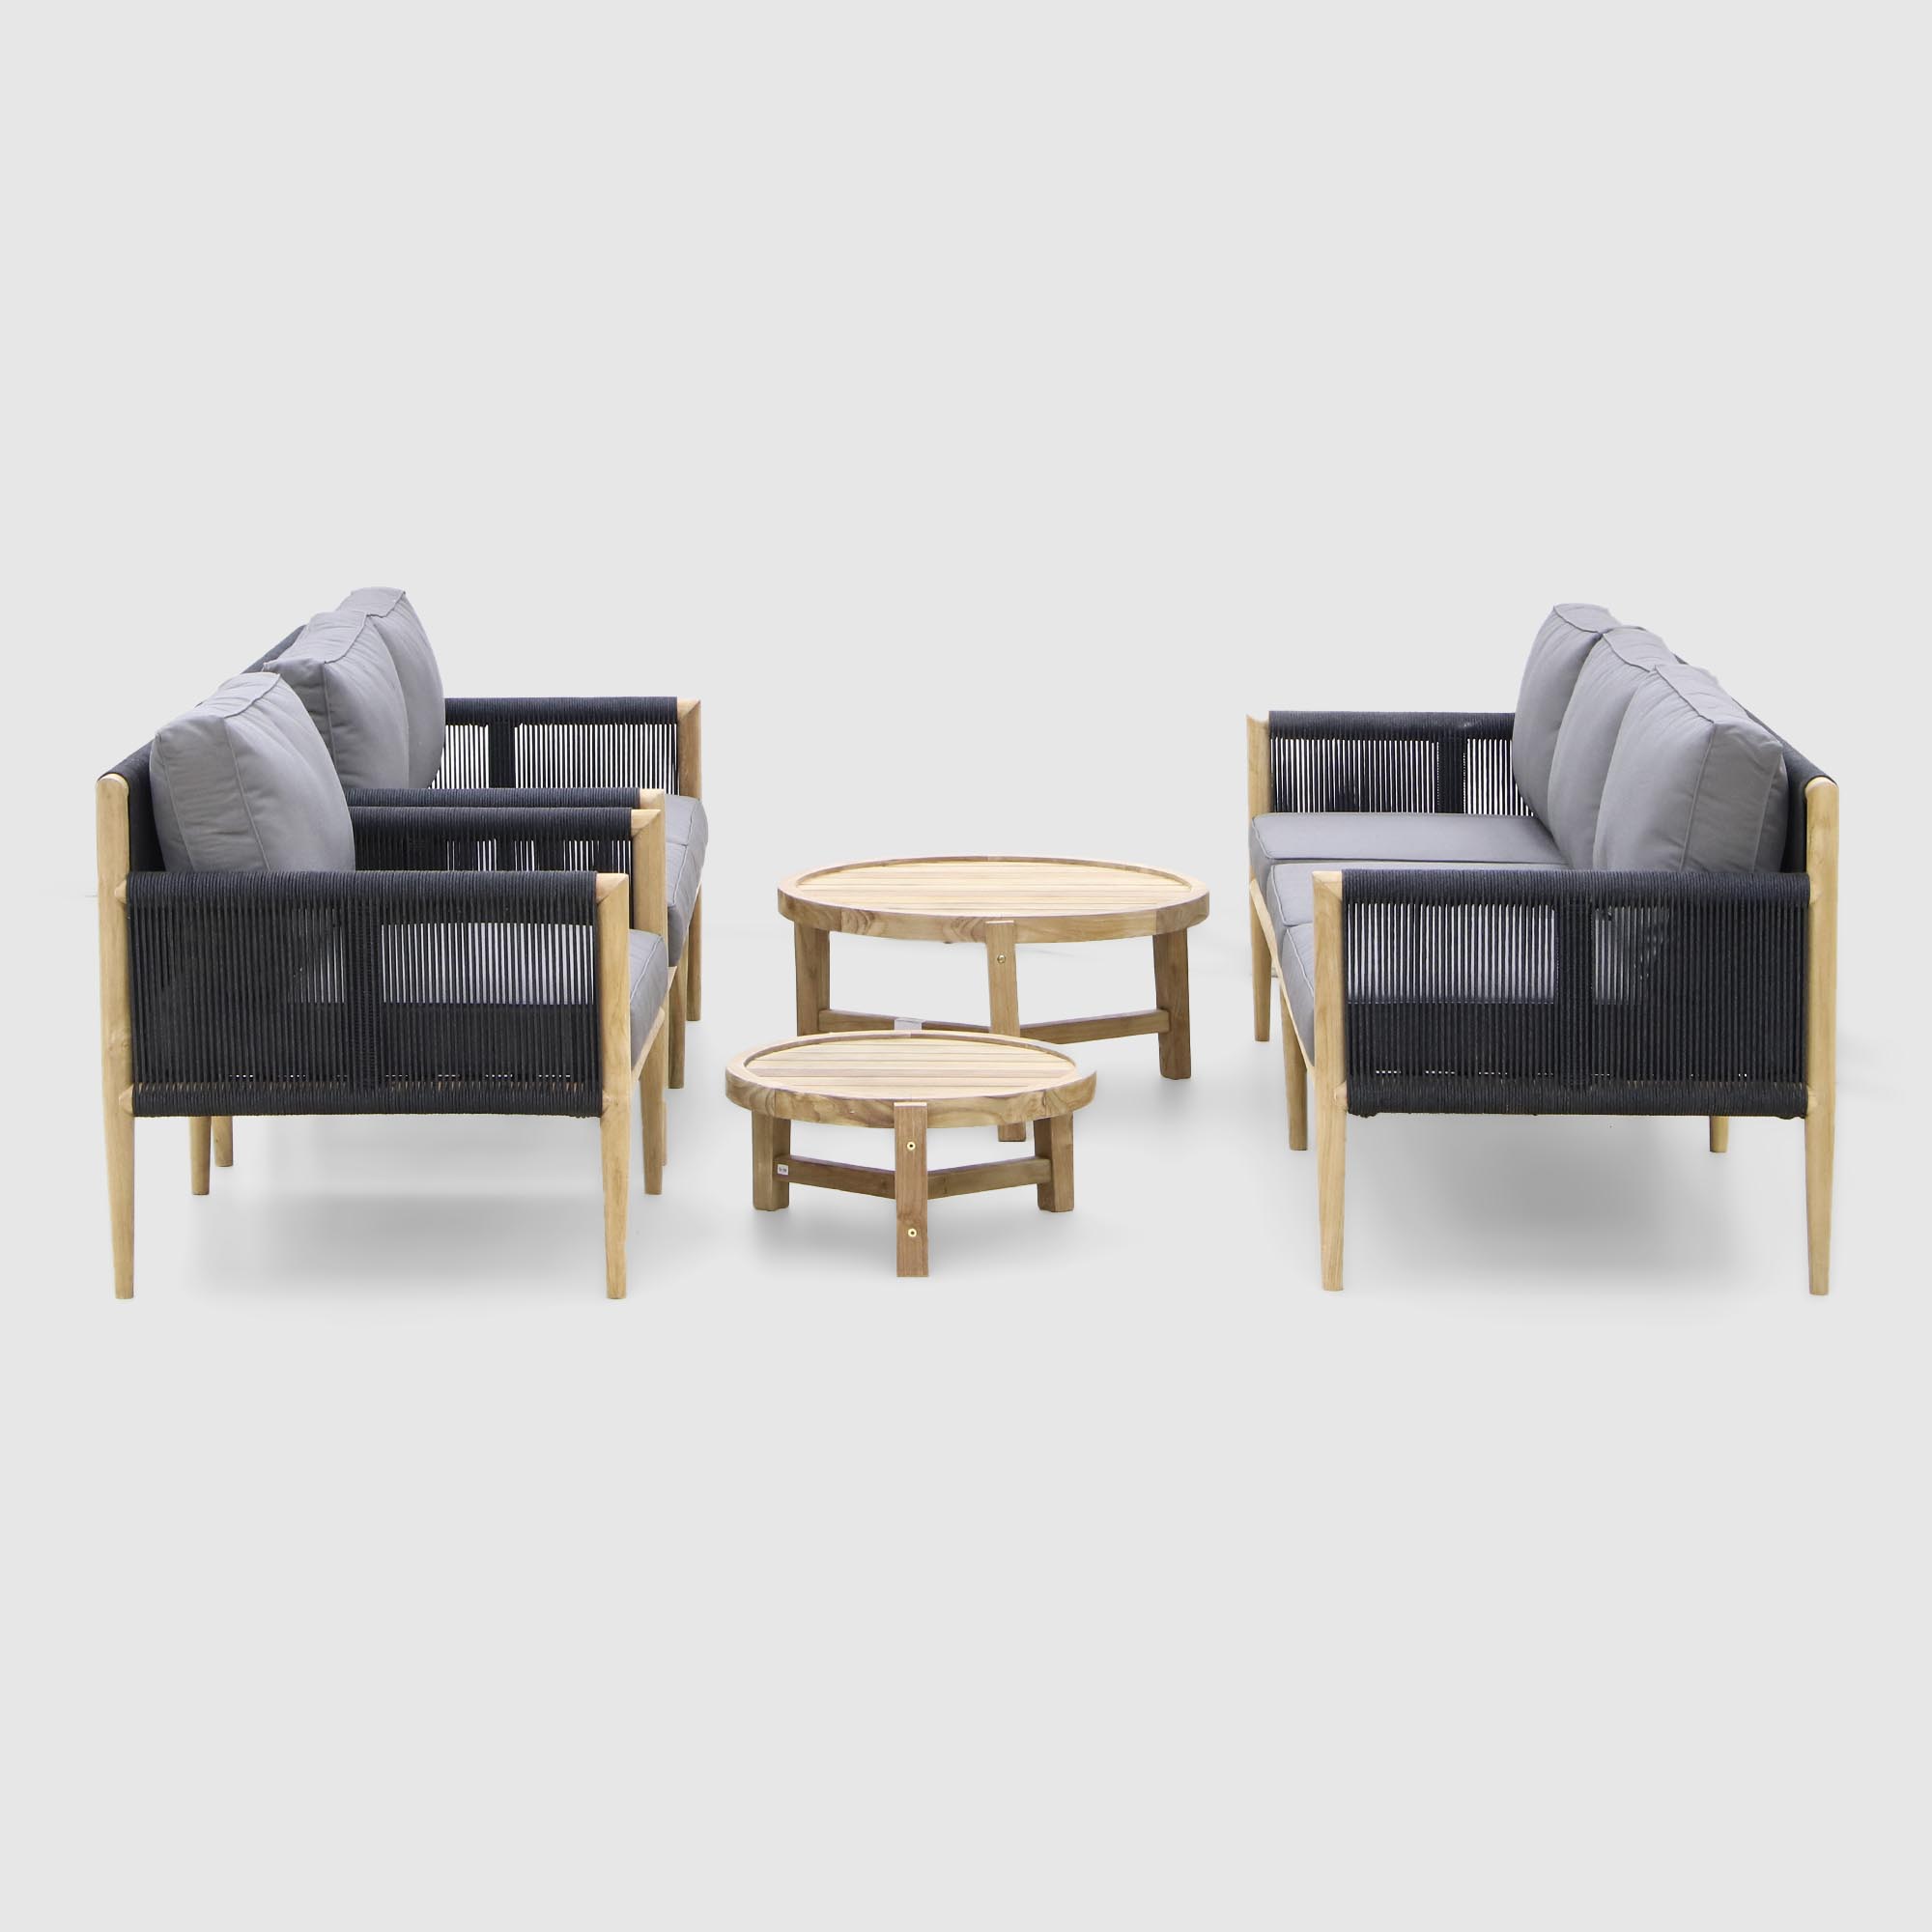 Комплект мебели Jepara Taurus из 5 предметов :2 дивана+кресло+столики, цвет светло-коричневый, размер 220х80х80 см и 150х80х80